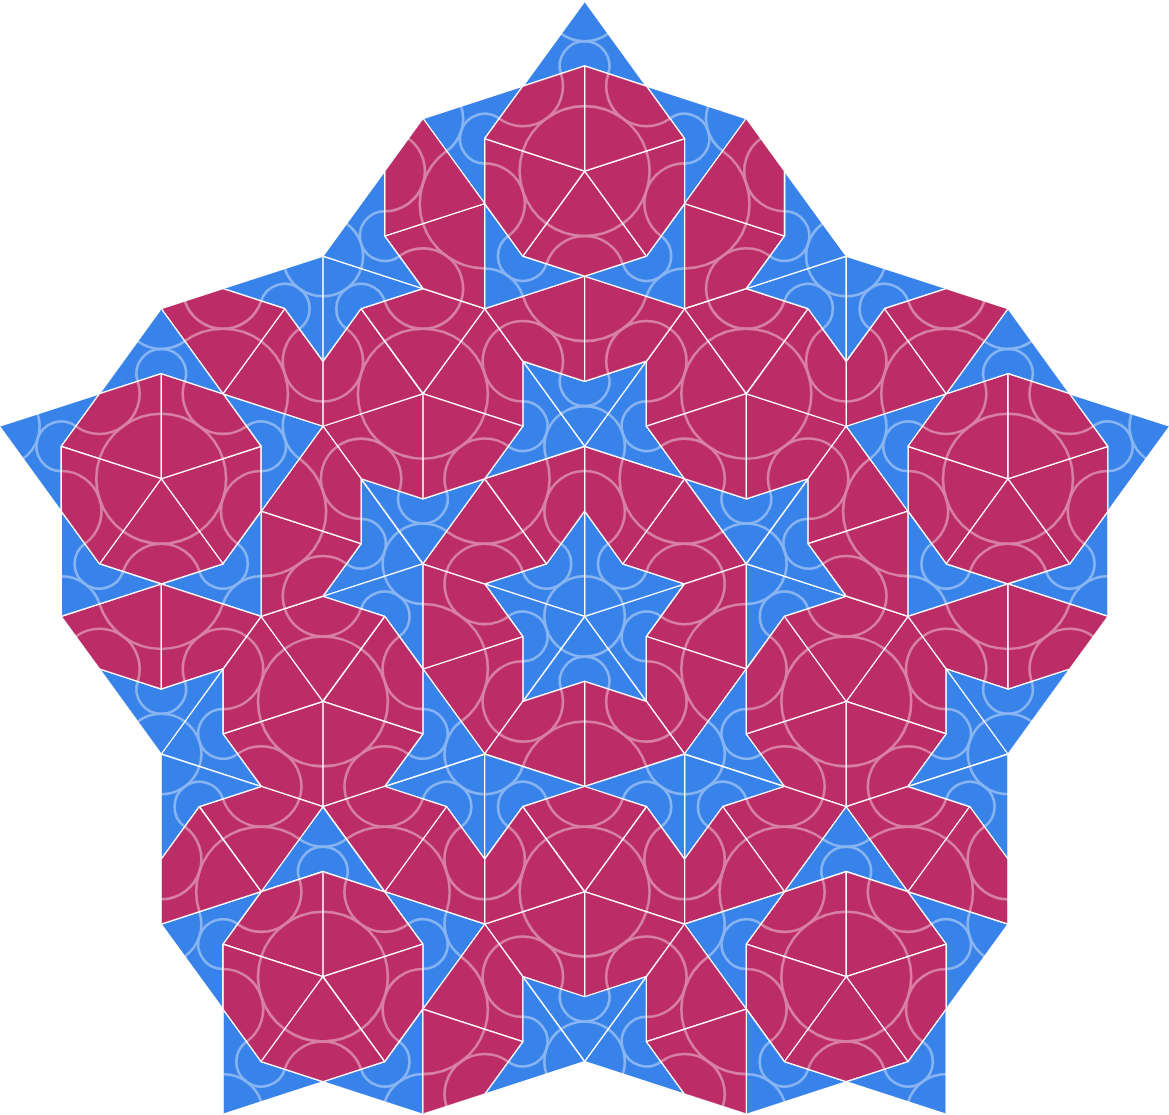 opengl tessellation example reddit